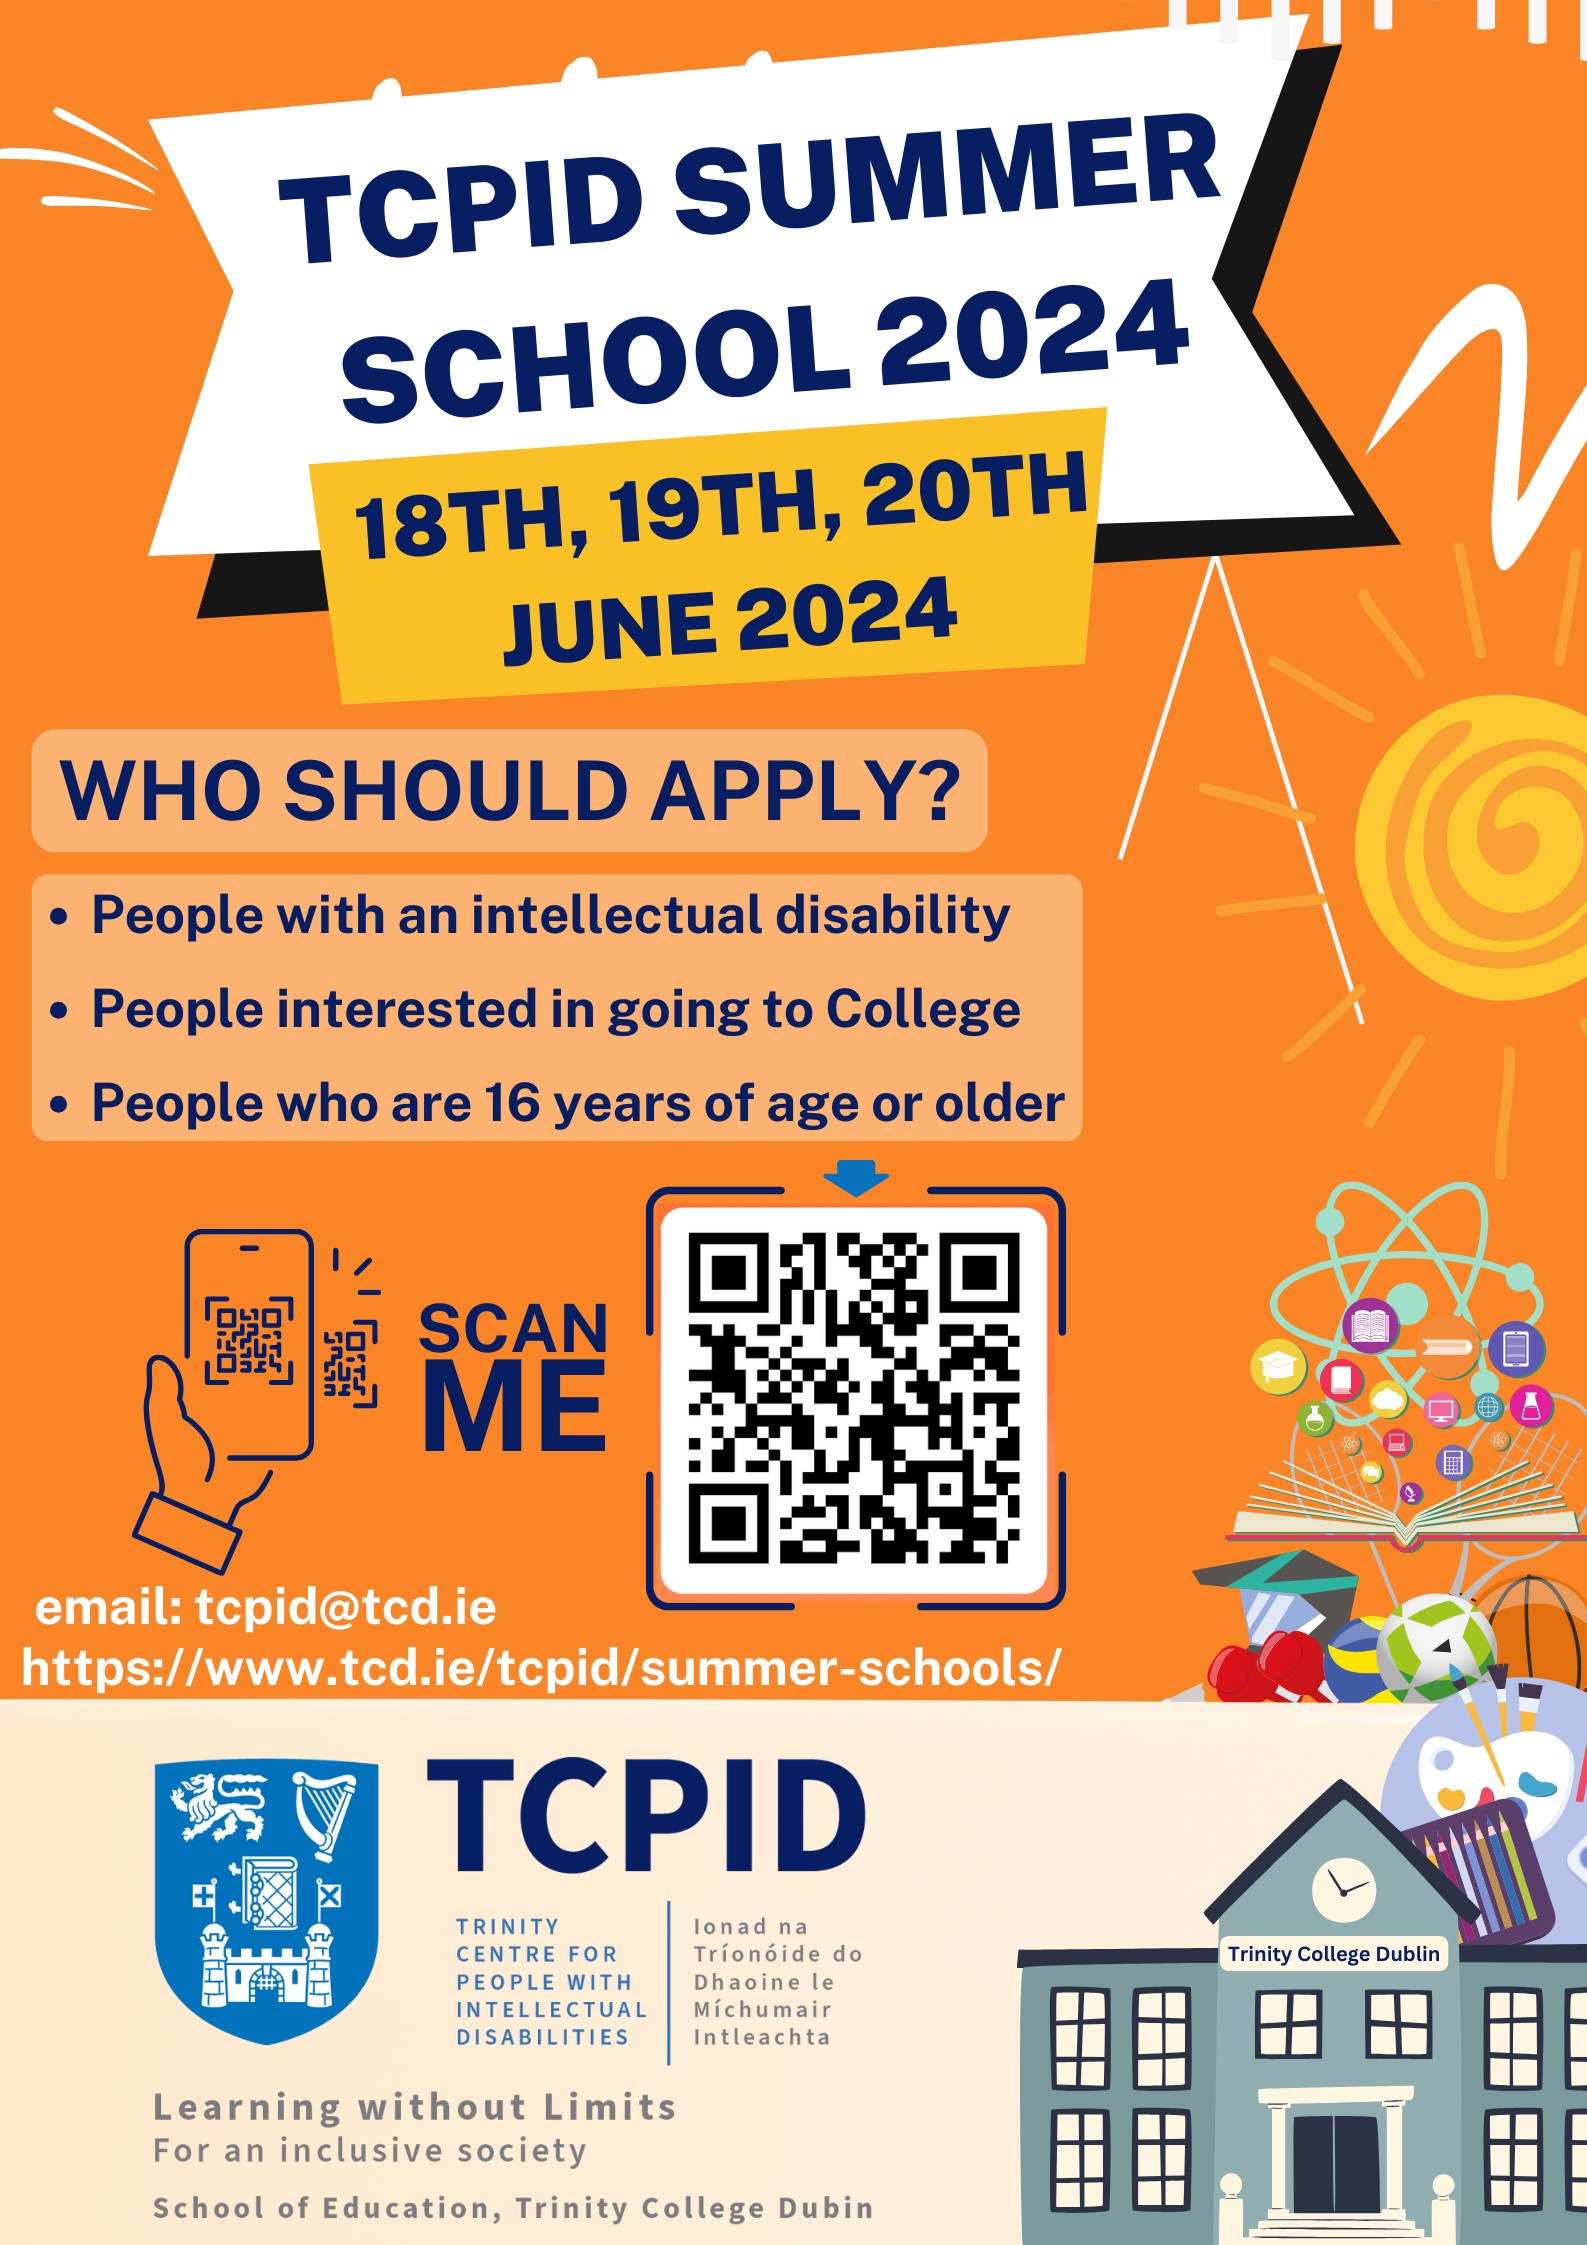 TCPID Summer School TCPID Trinity College Dublin